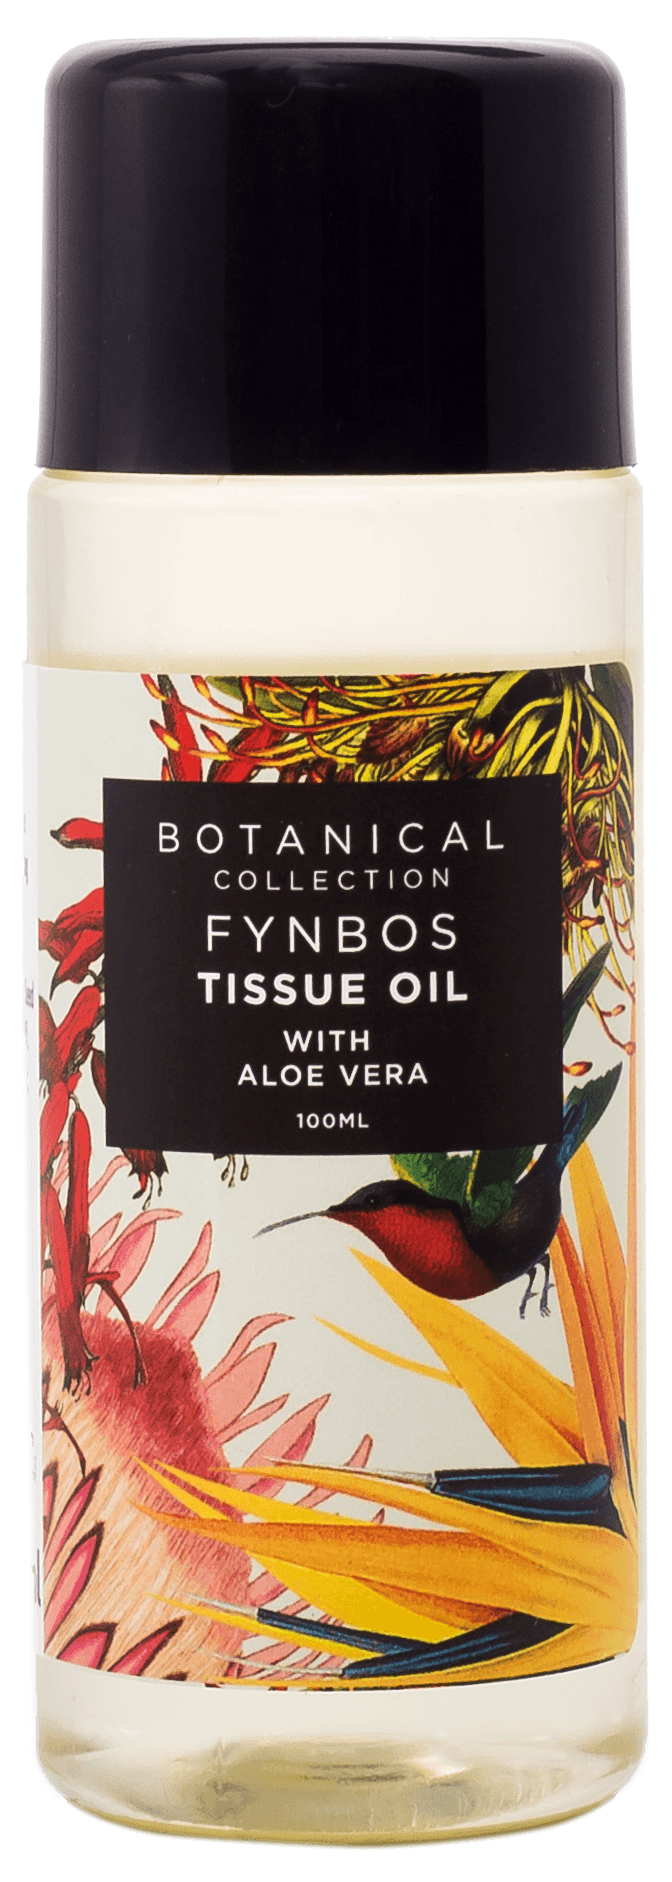 Fynbos Tissue Oil - Shopping4Africa